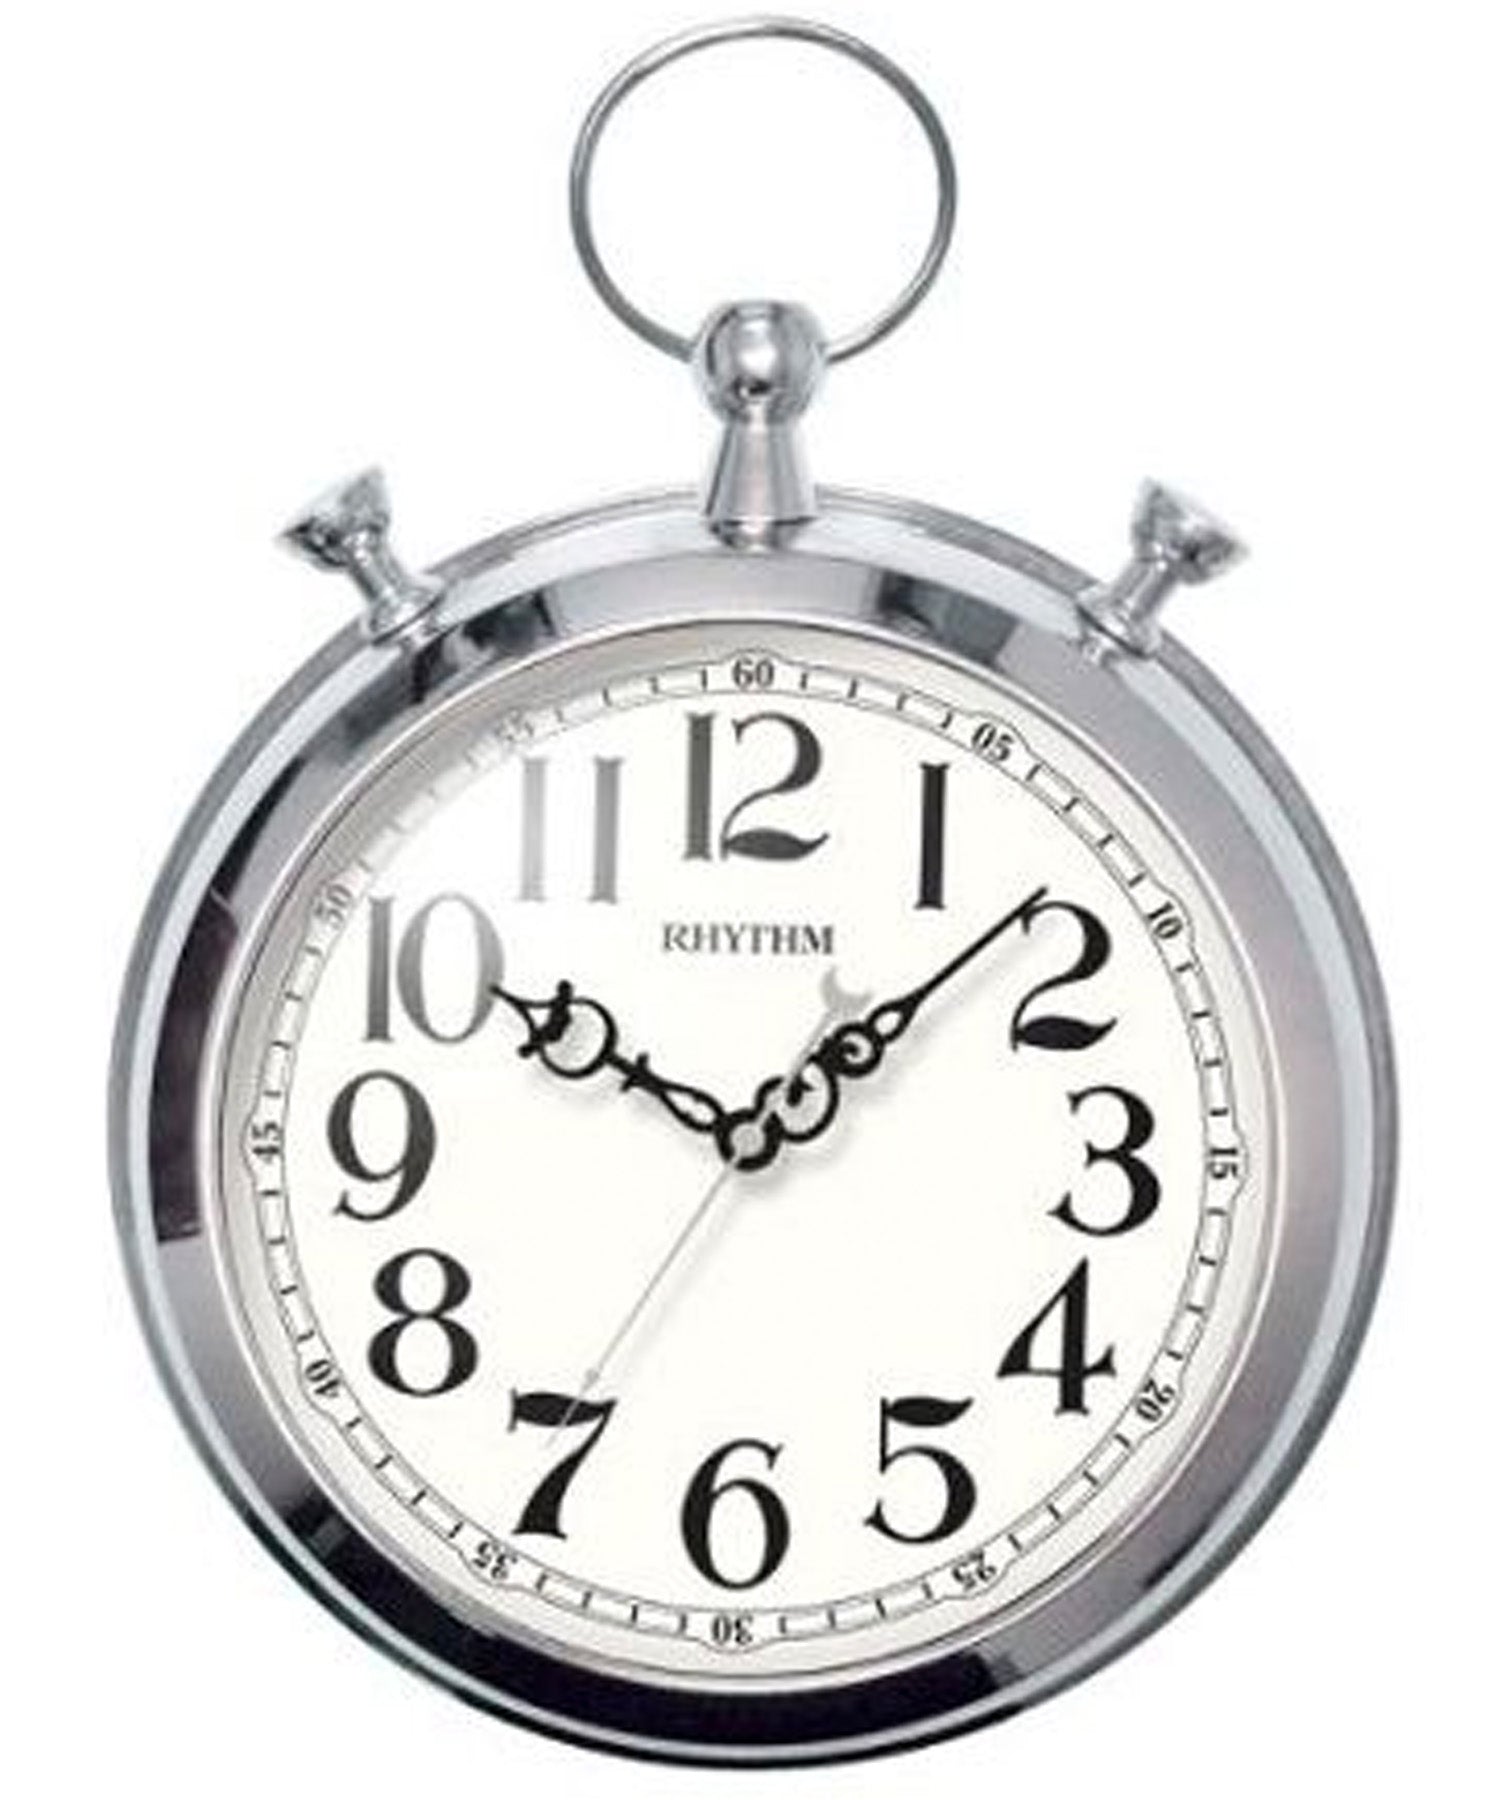 Rhythm, Metal Stopwatch Style Wall Clock, CMG571NR19